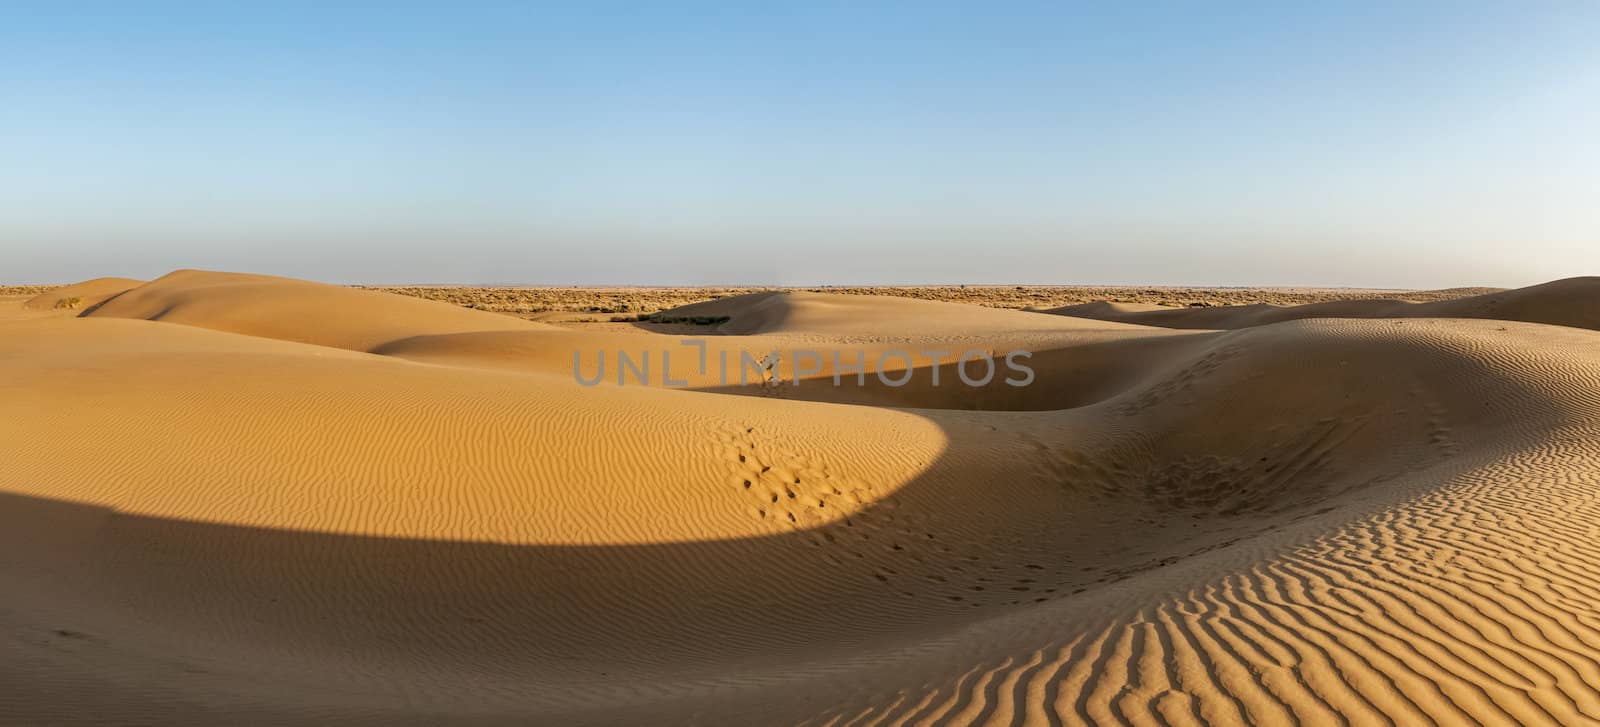 Panorama of dunes in Thar Desert, Rajasthan, India by dimol